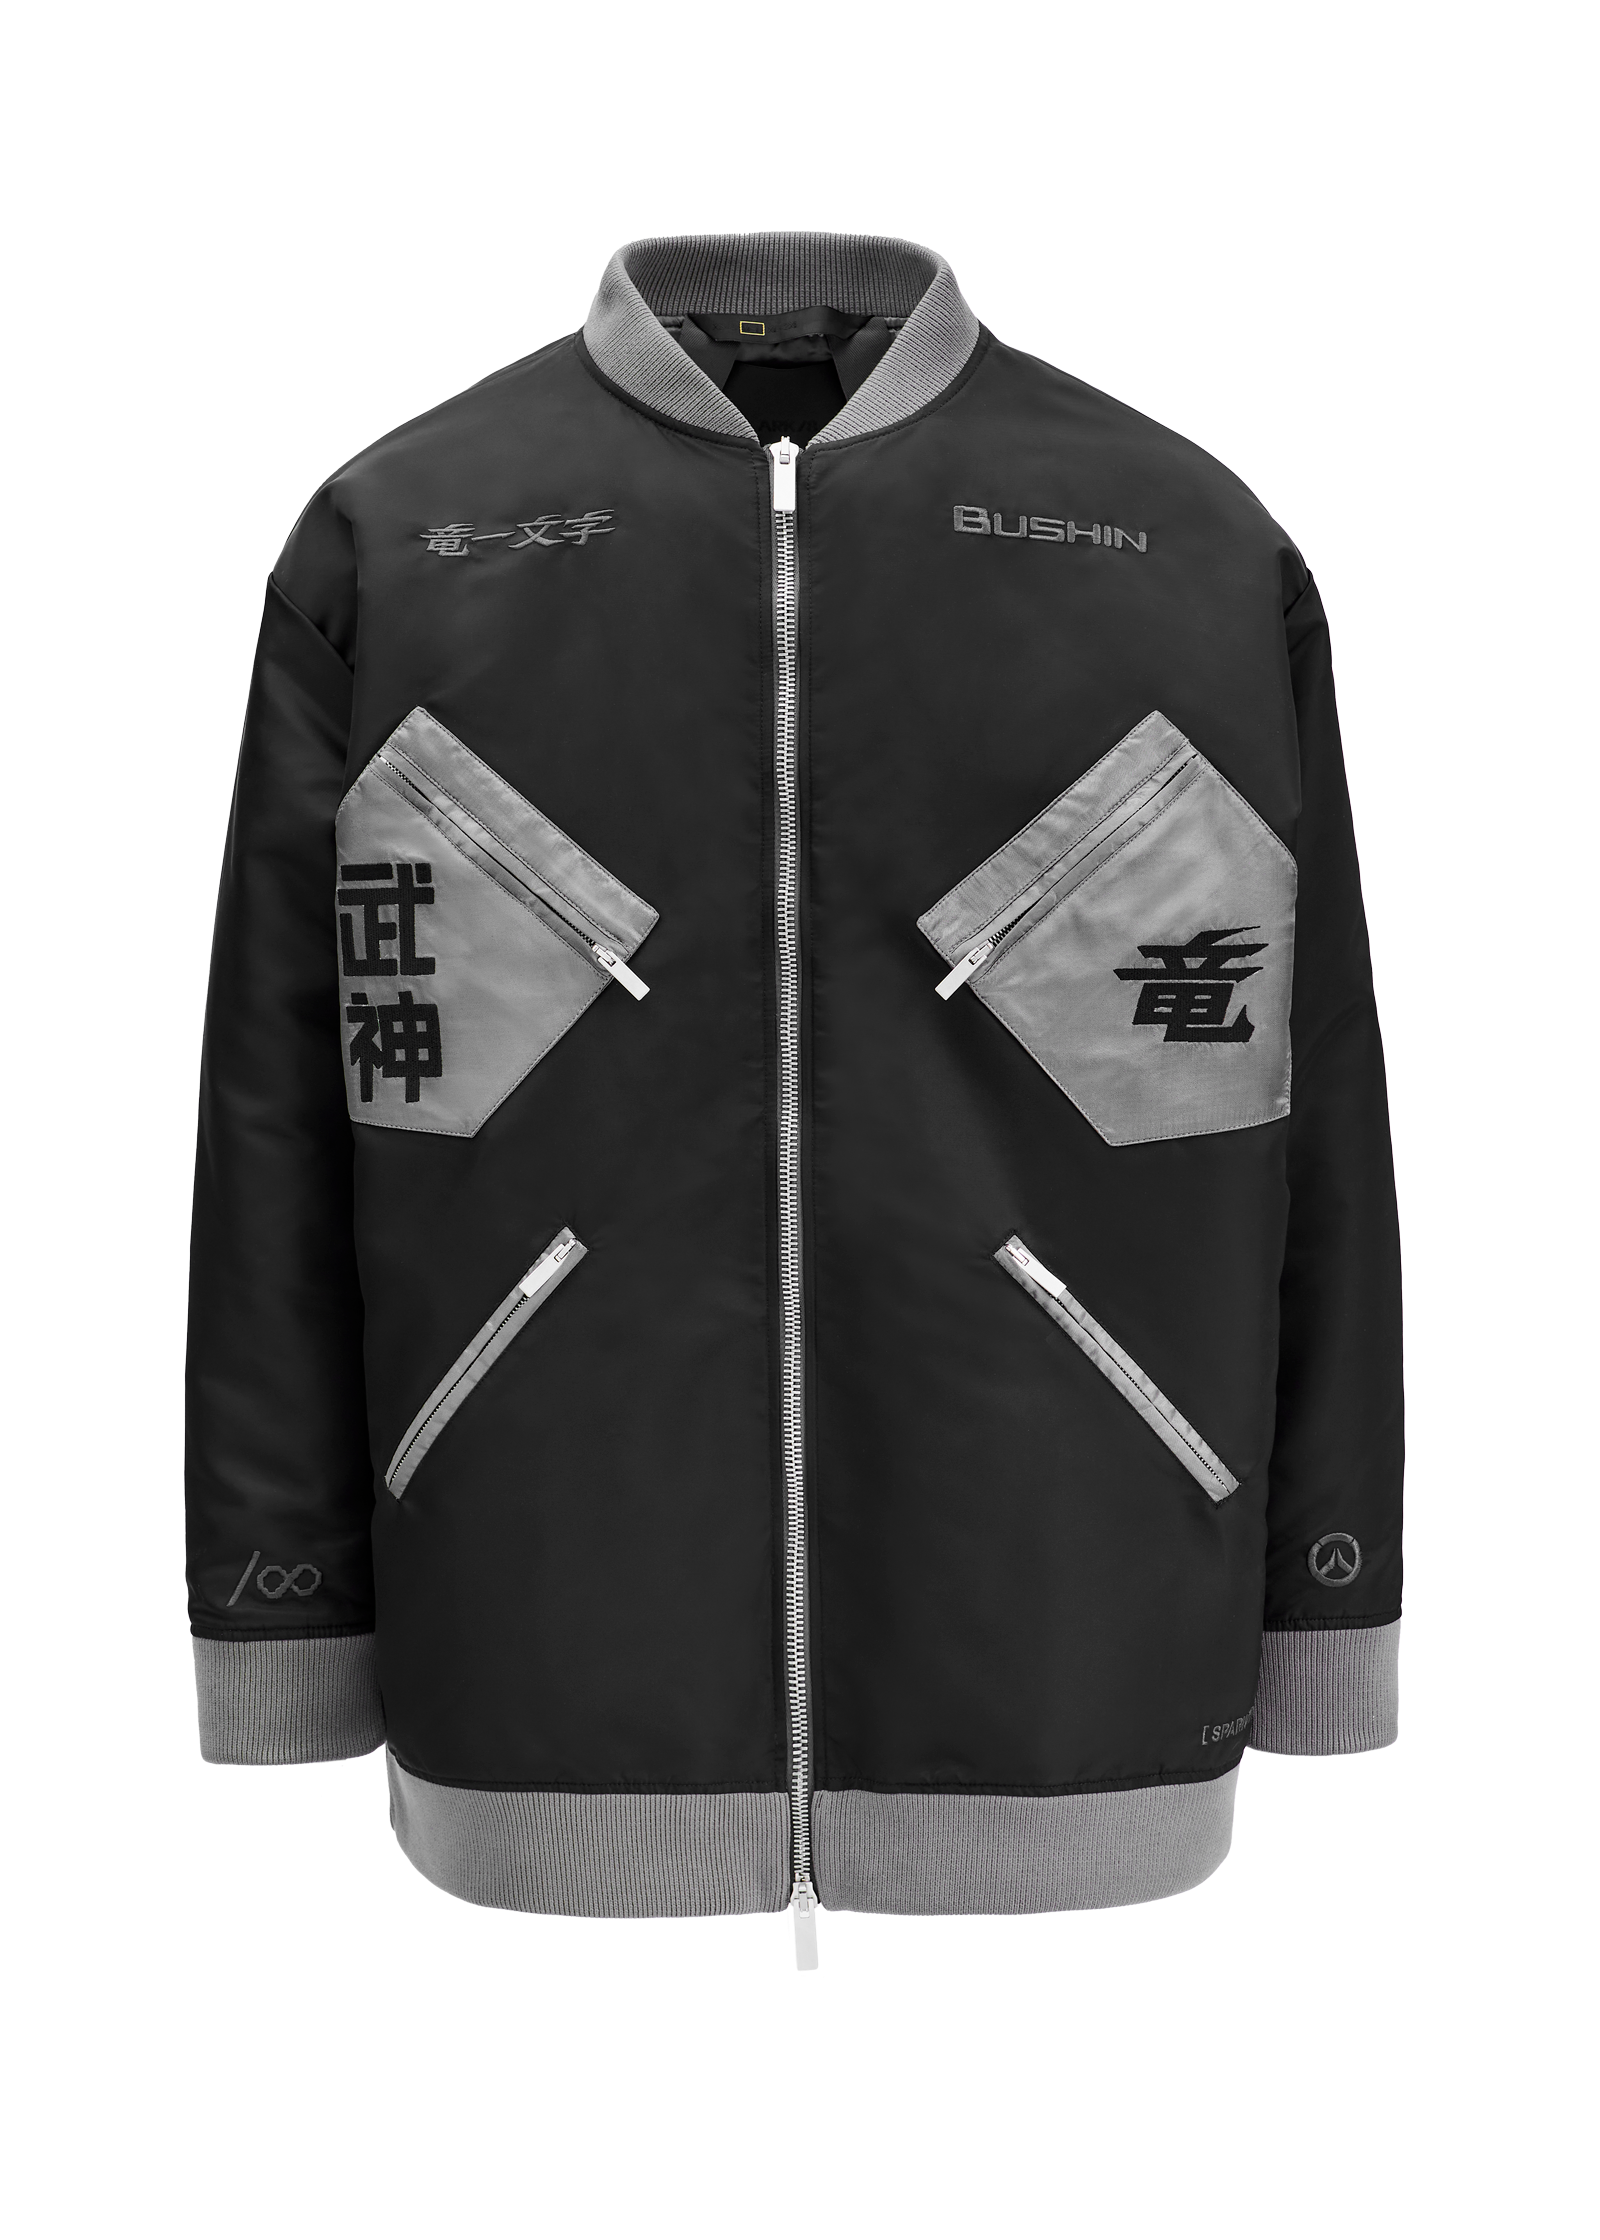 Genji bushin bomber jacket front view